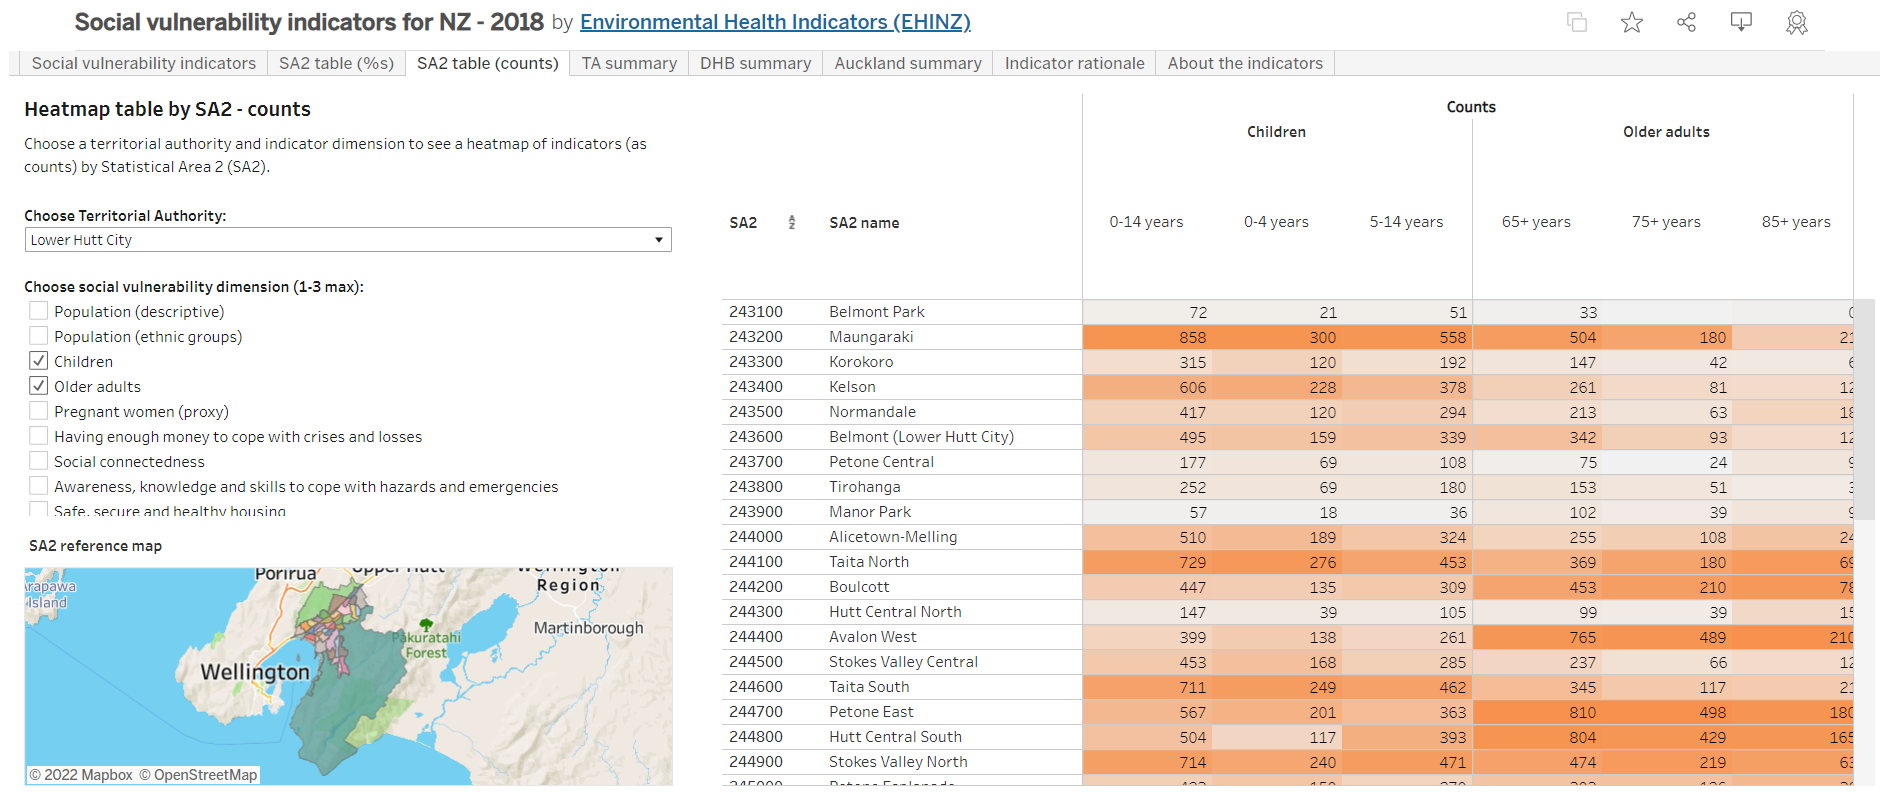 Environmental Health Indicators (EHINZ)